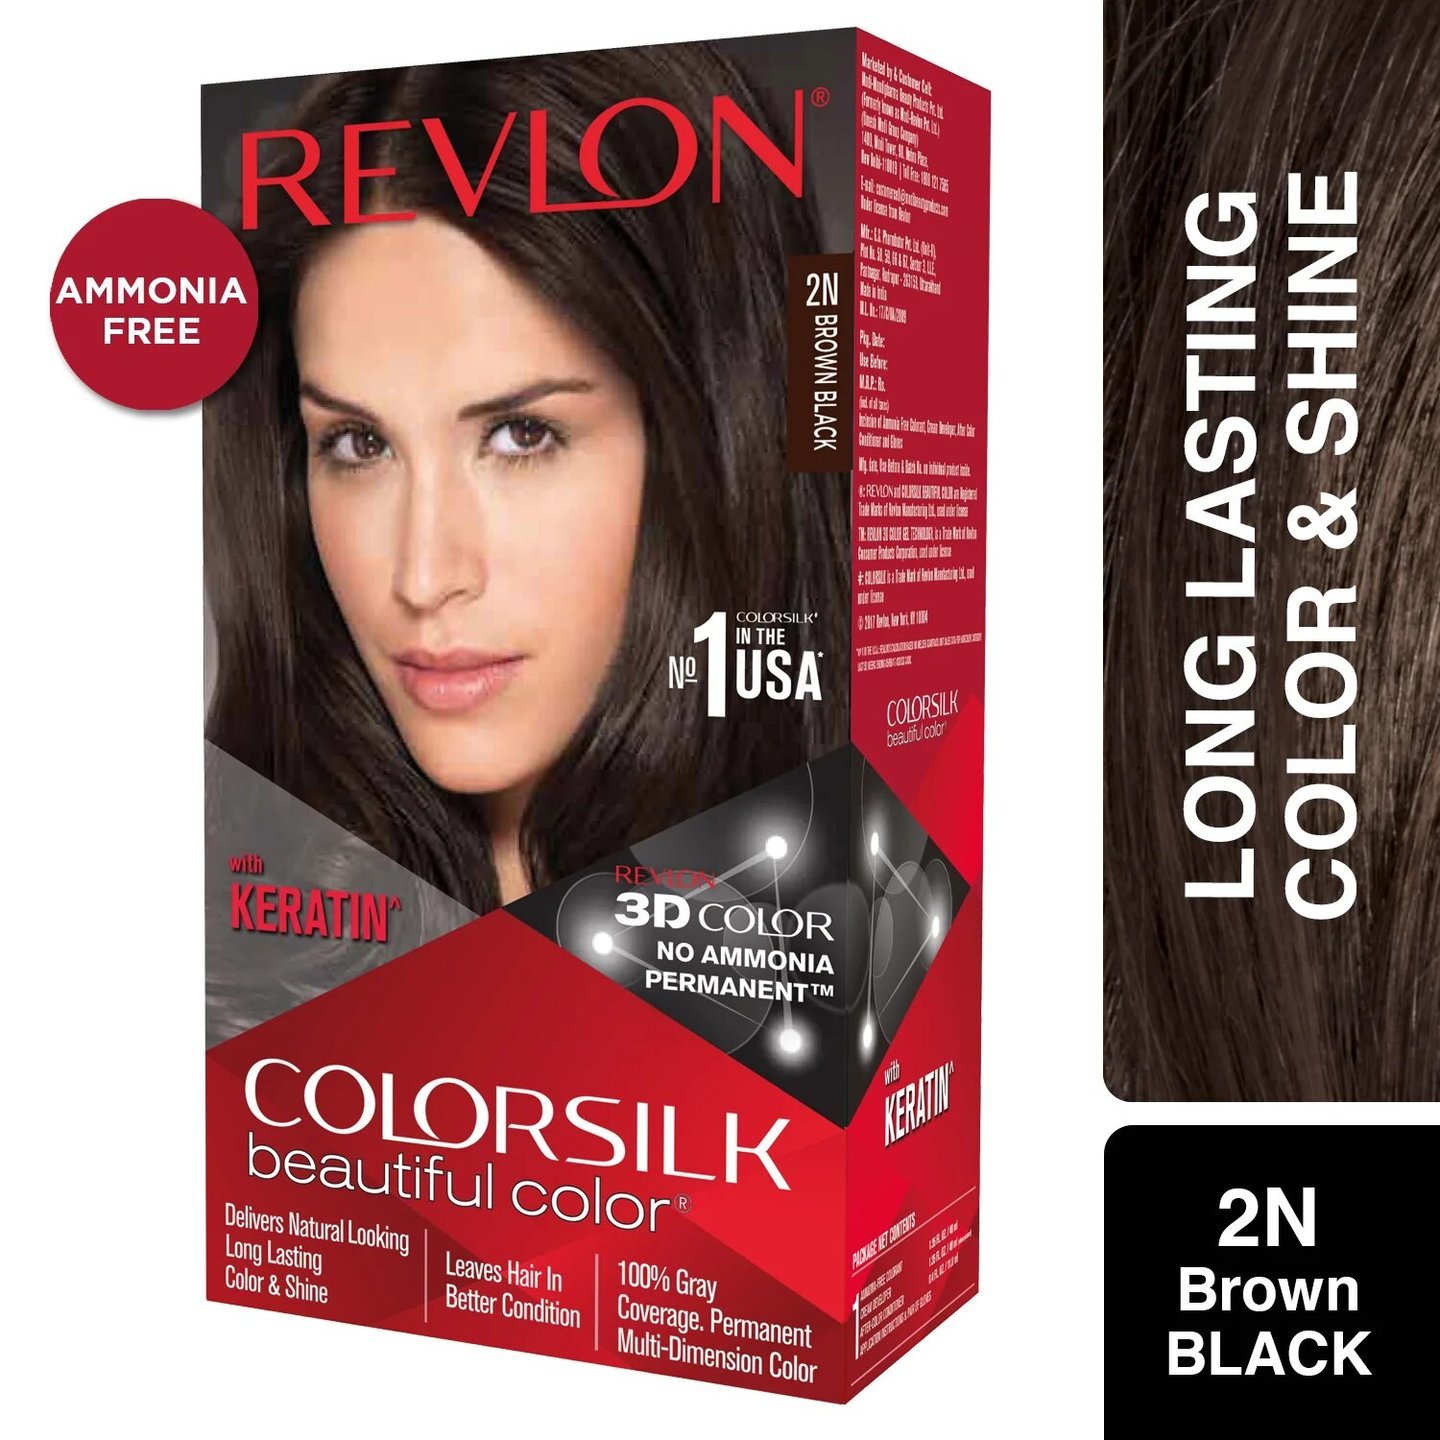 REVLON COLORSILK BROWN BLACK 2N Hair Color